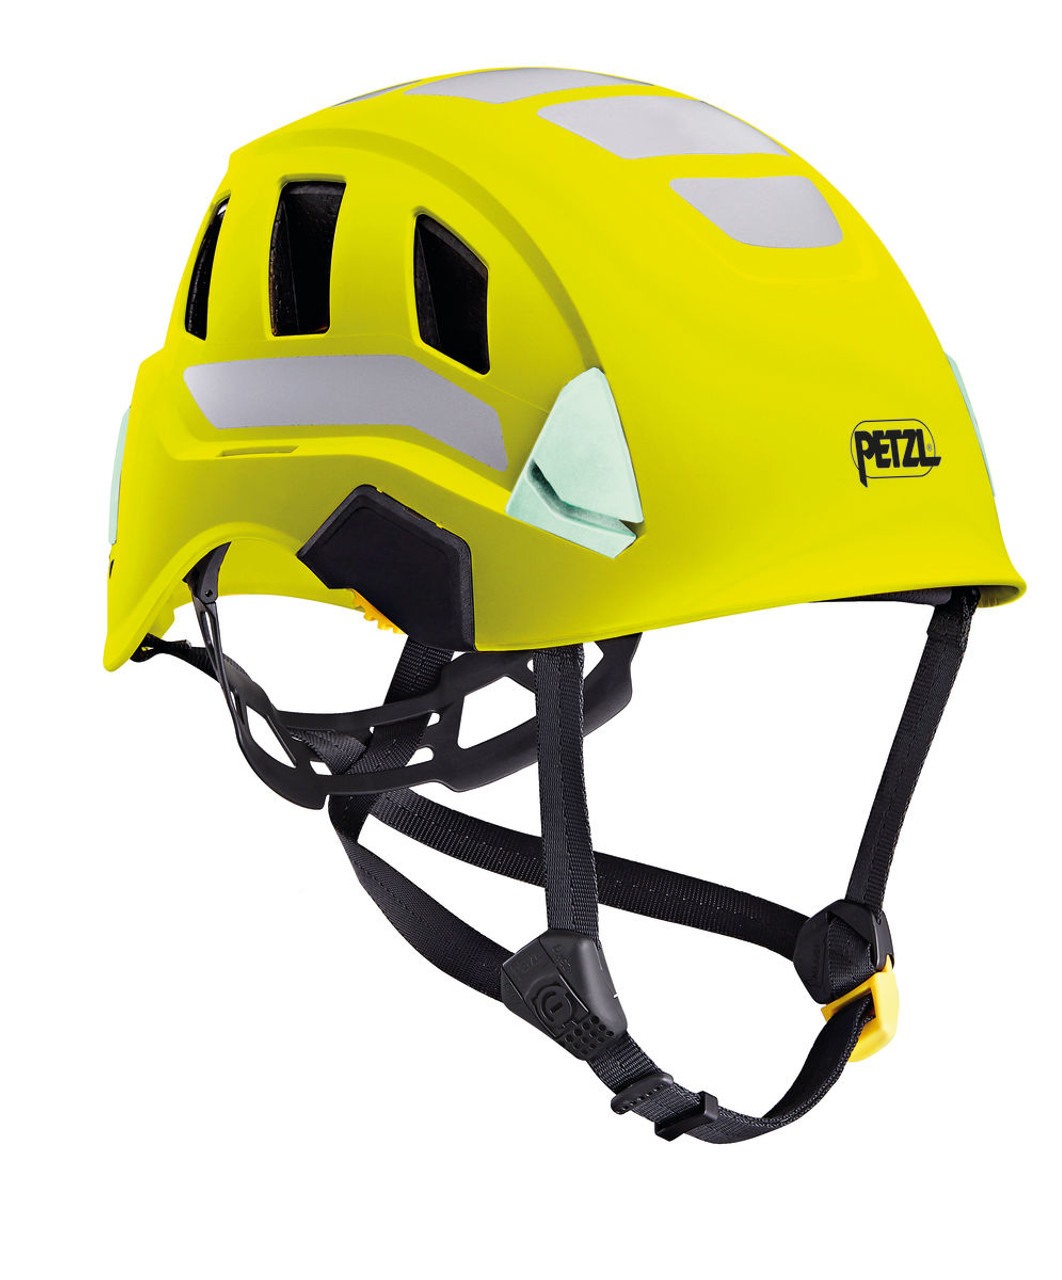 Lightweight, ventilated high-visibility helmet